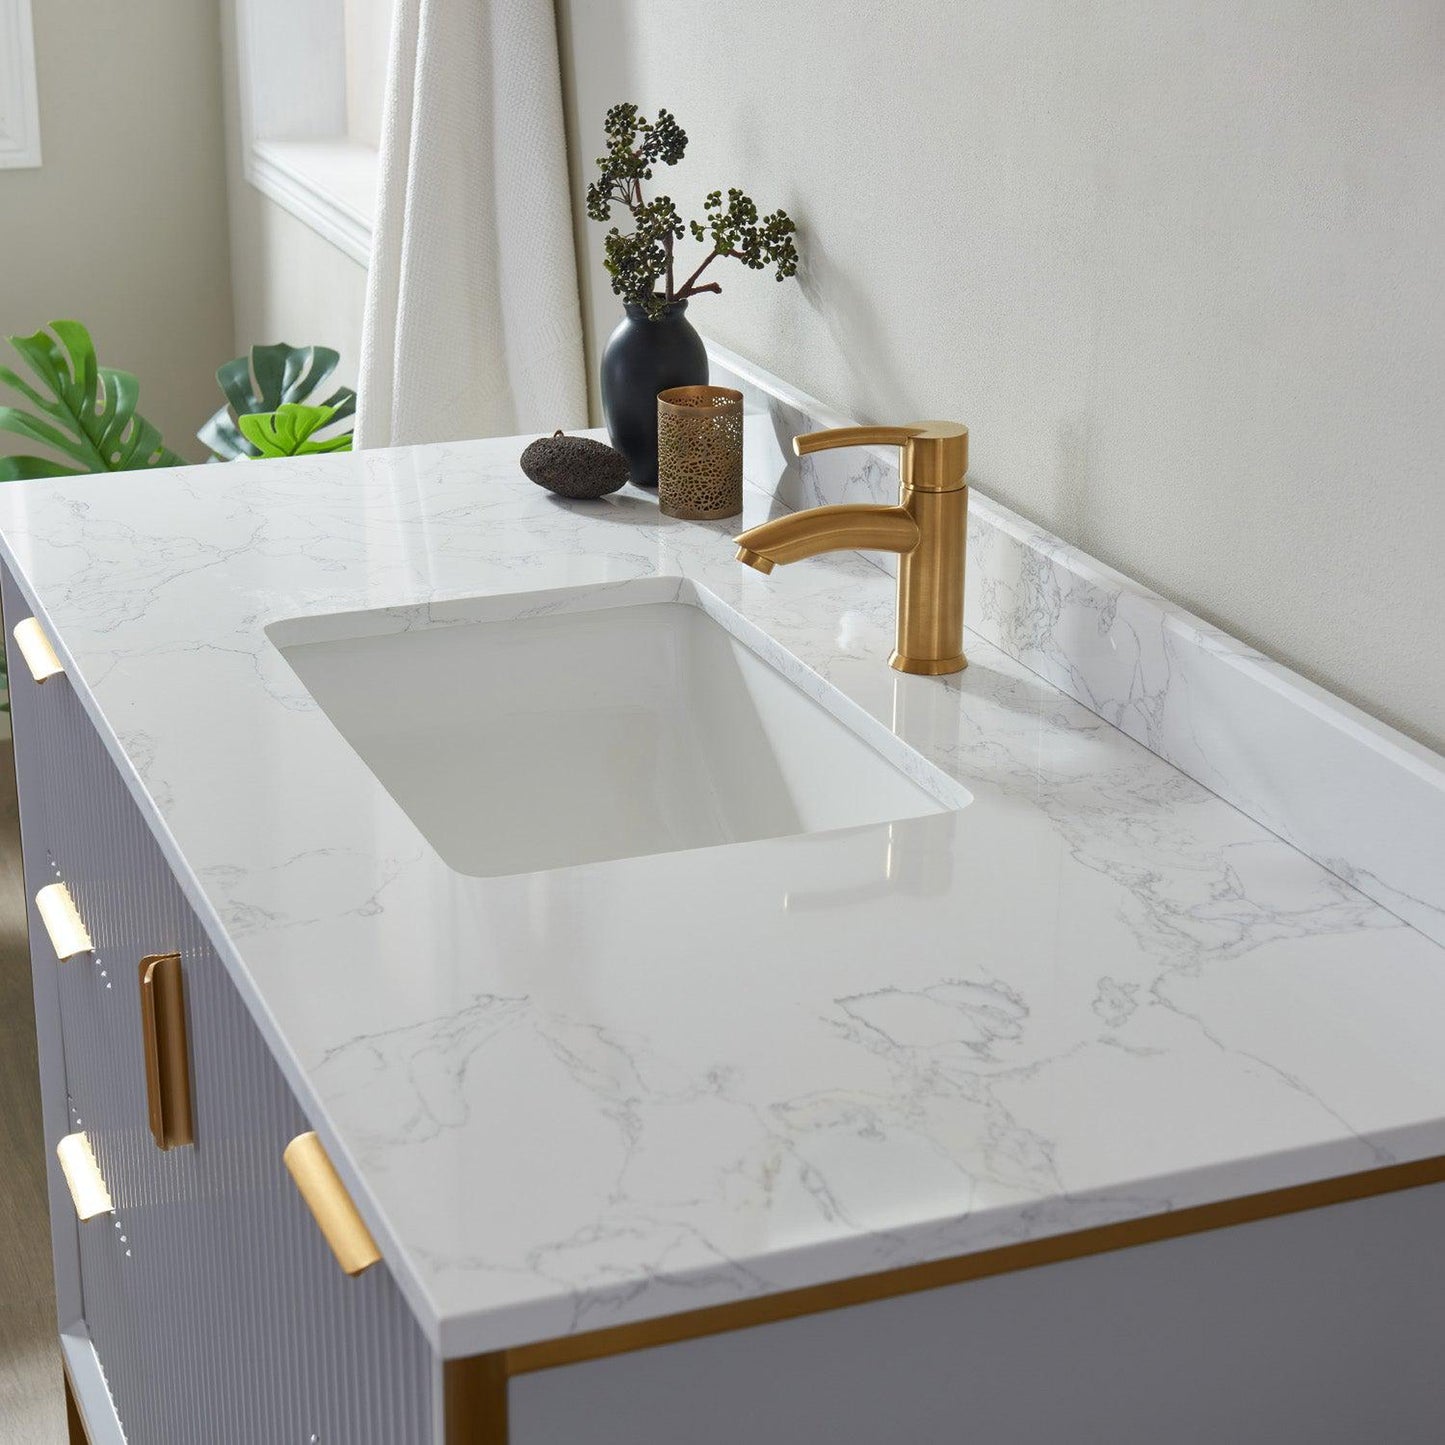 Vinnova Granada 48" Single Vanity In Paris Grey With White Composite Grain Stone Countertop